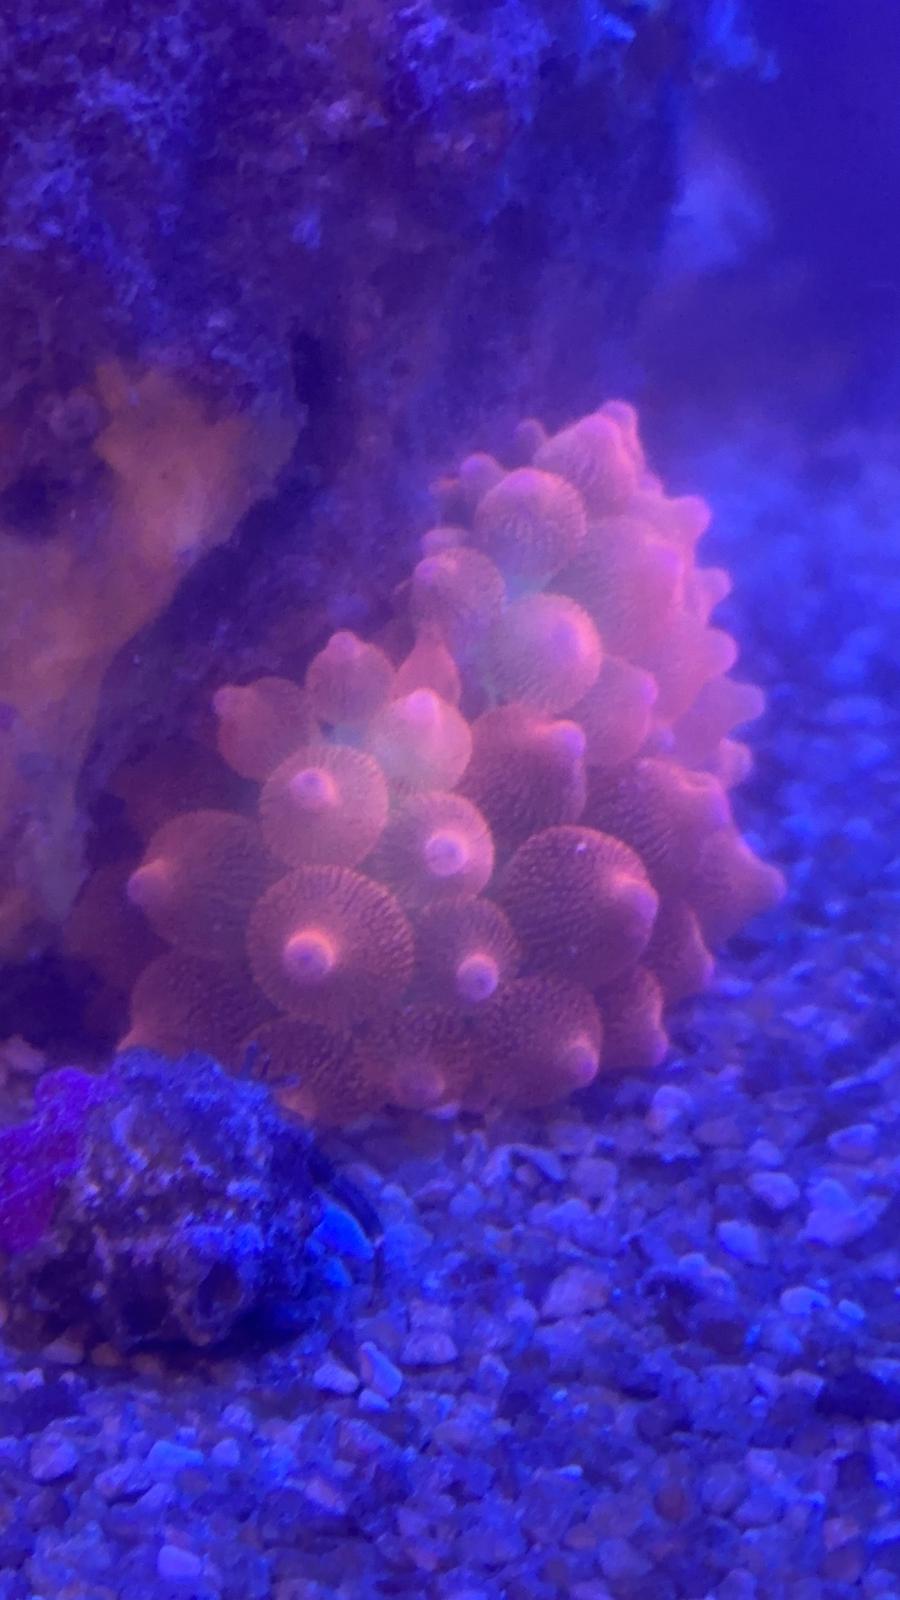 Rainbow bubble tip anemone large